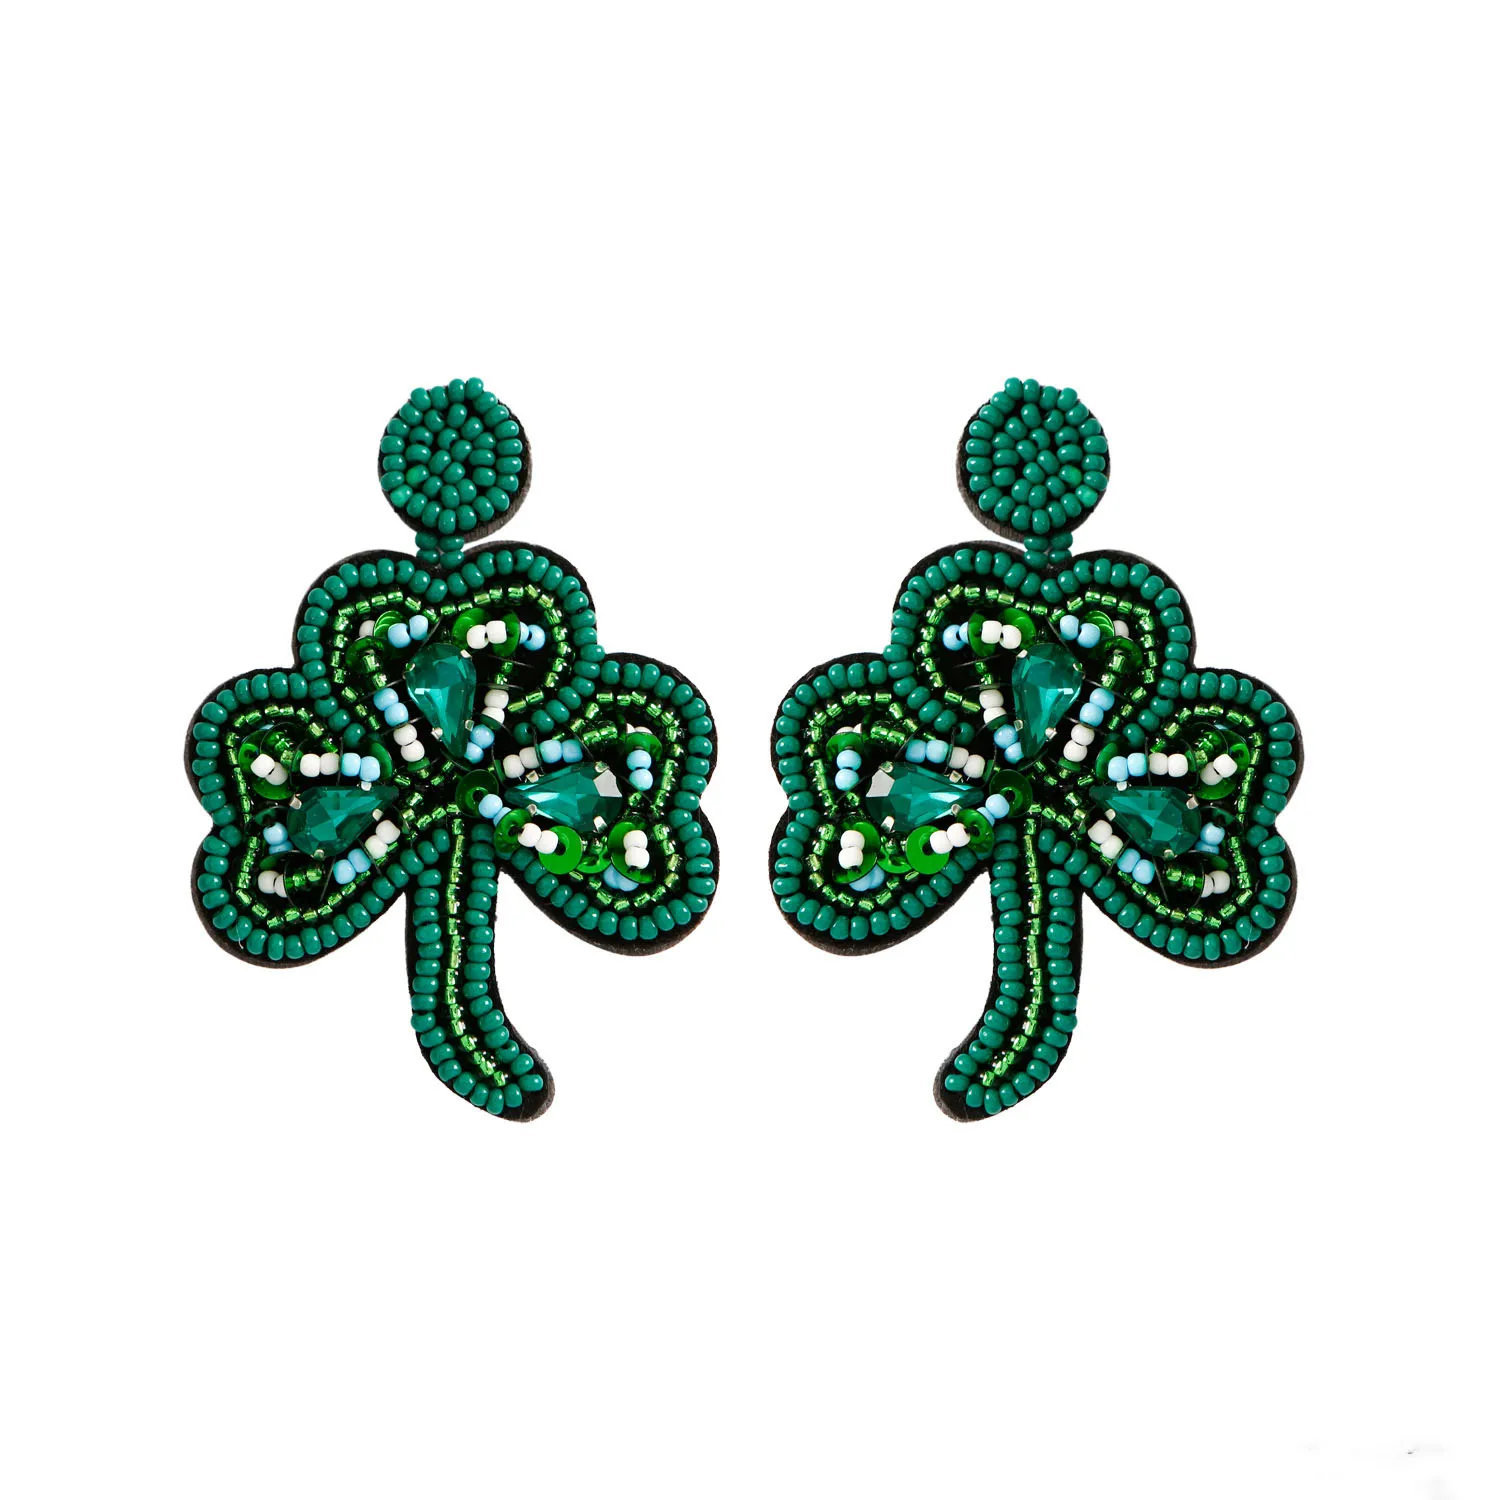 BEADED SHAMROCK EARRINGS Seed Bead Shamrock Felt Post Drop Earring - Green Clover Gift for Her St. Patrick's Day Accessories